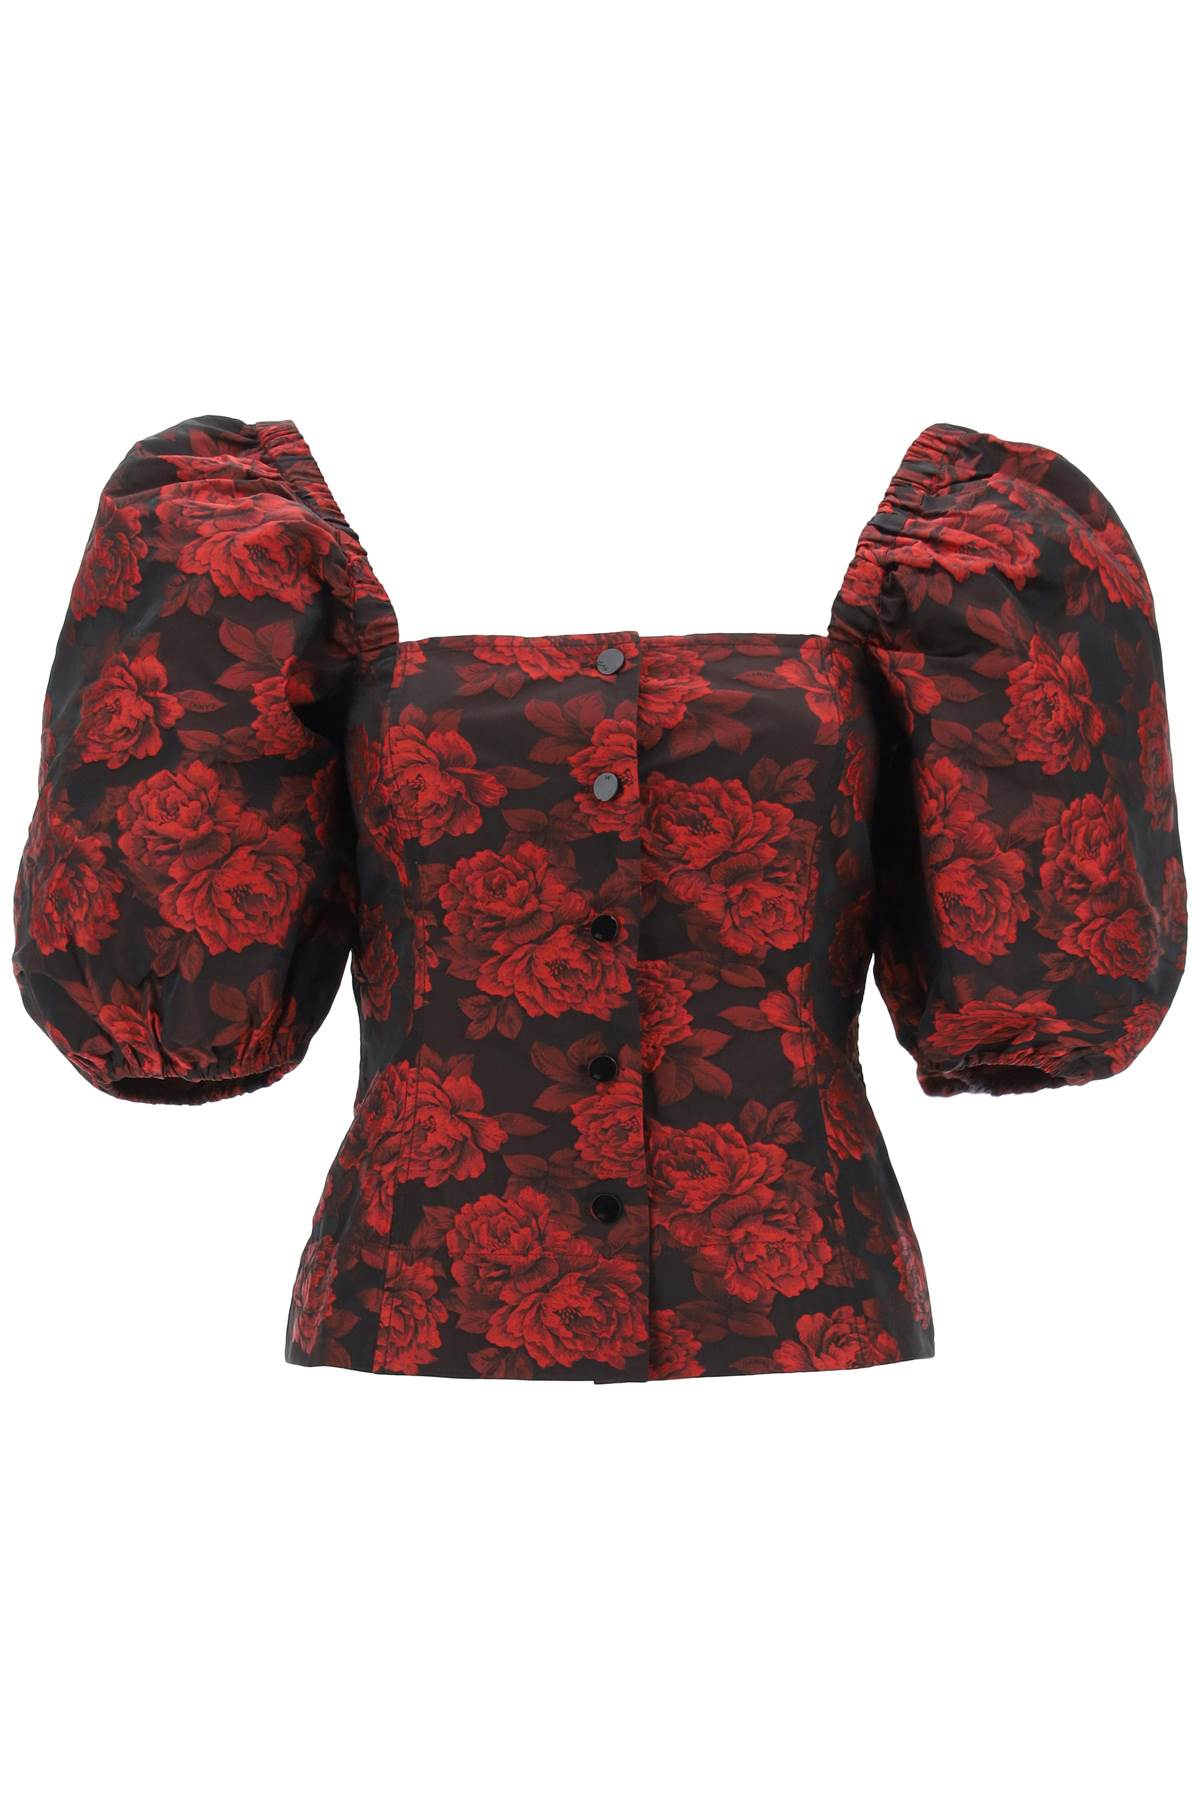 Ganni blouse in floral jacquard-0